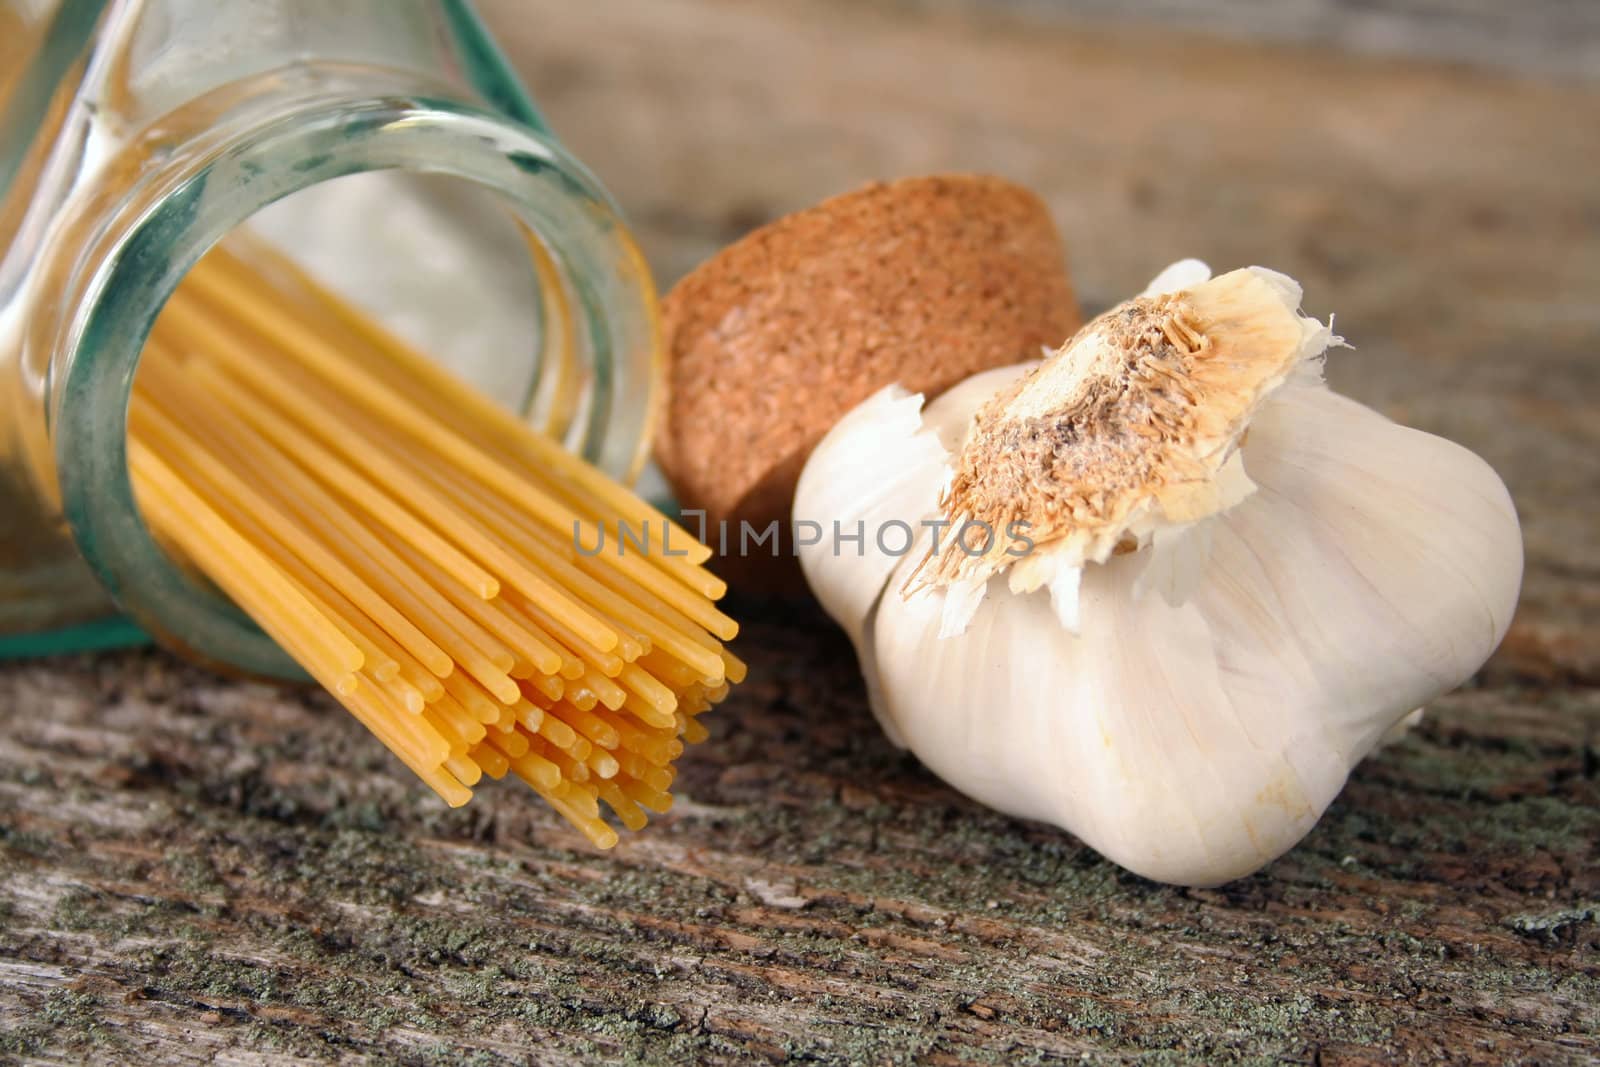 Spaghetti and Garlic by thephotoguy